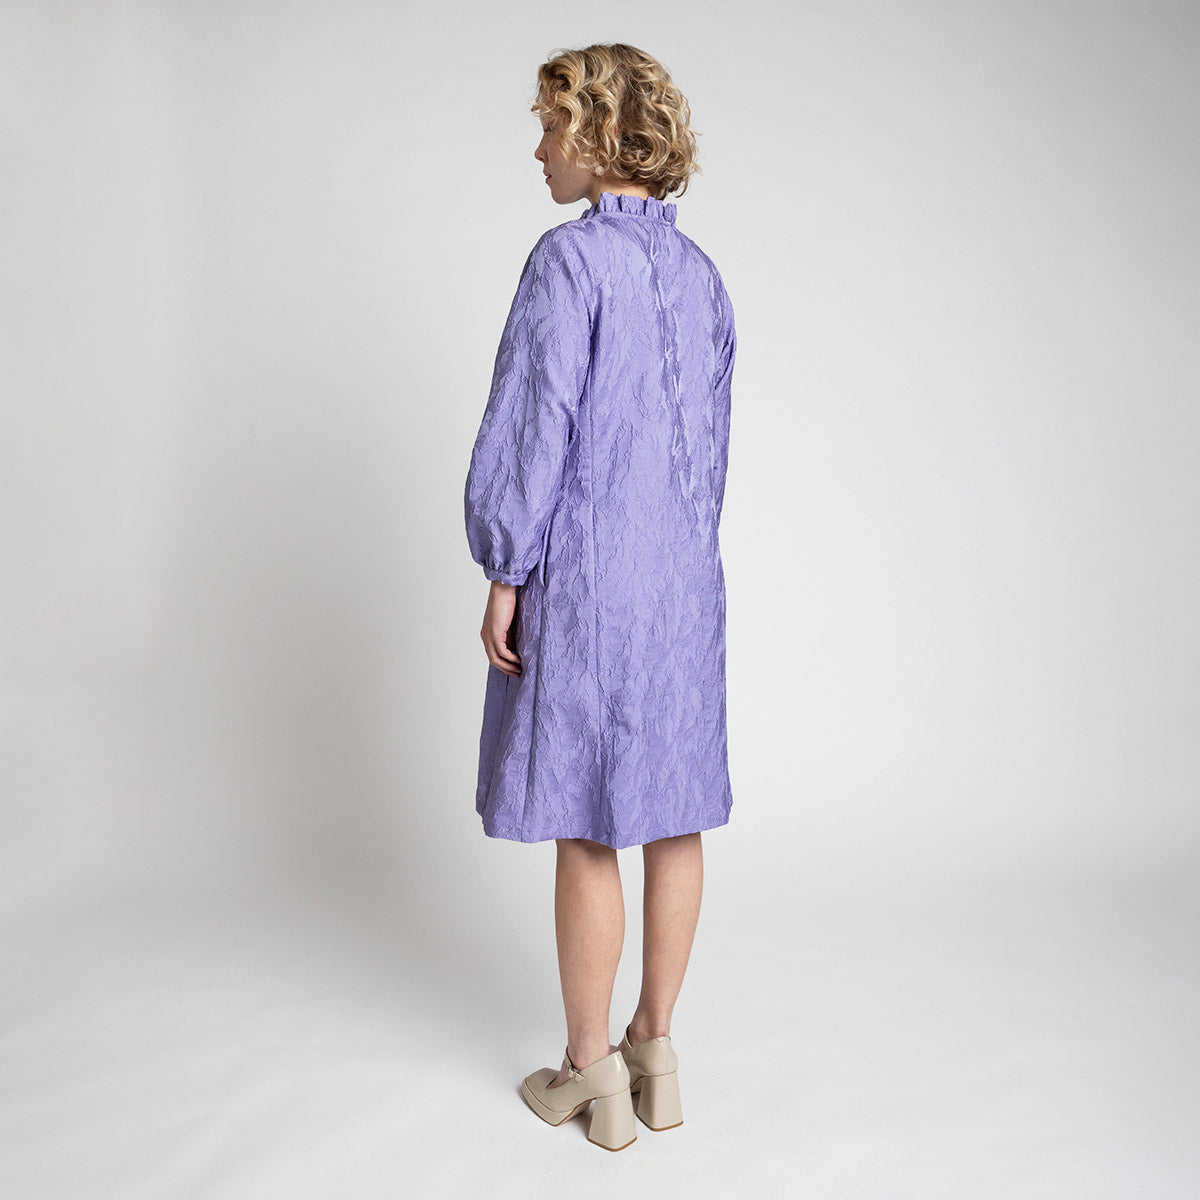 Moona dress, lavender